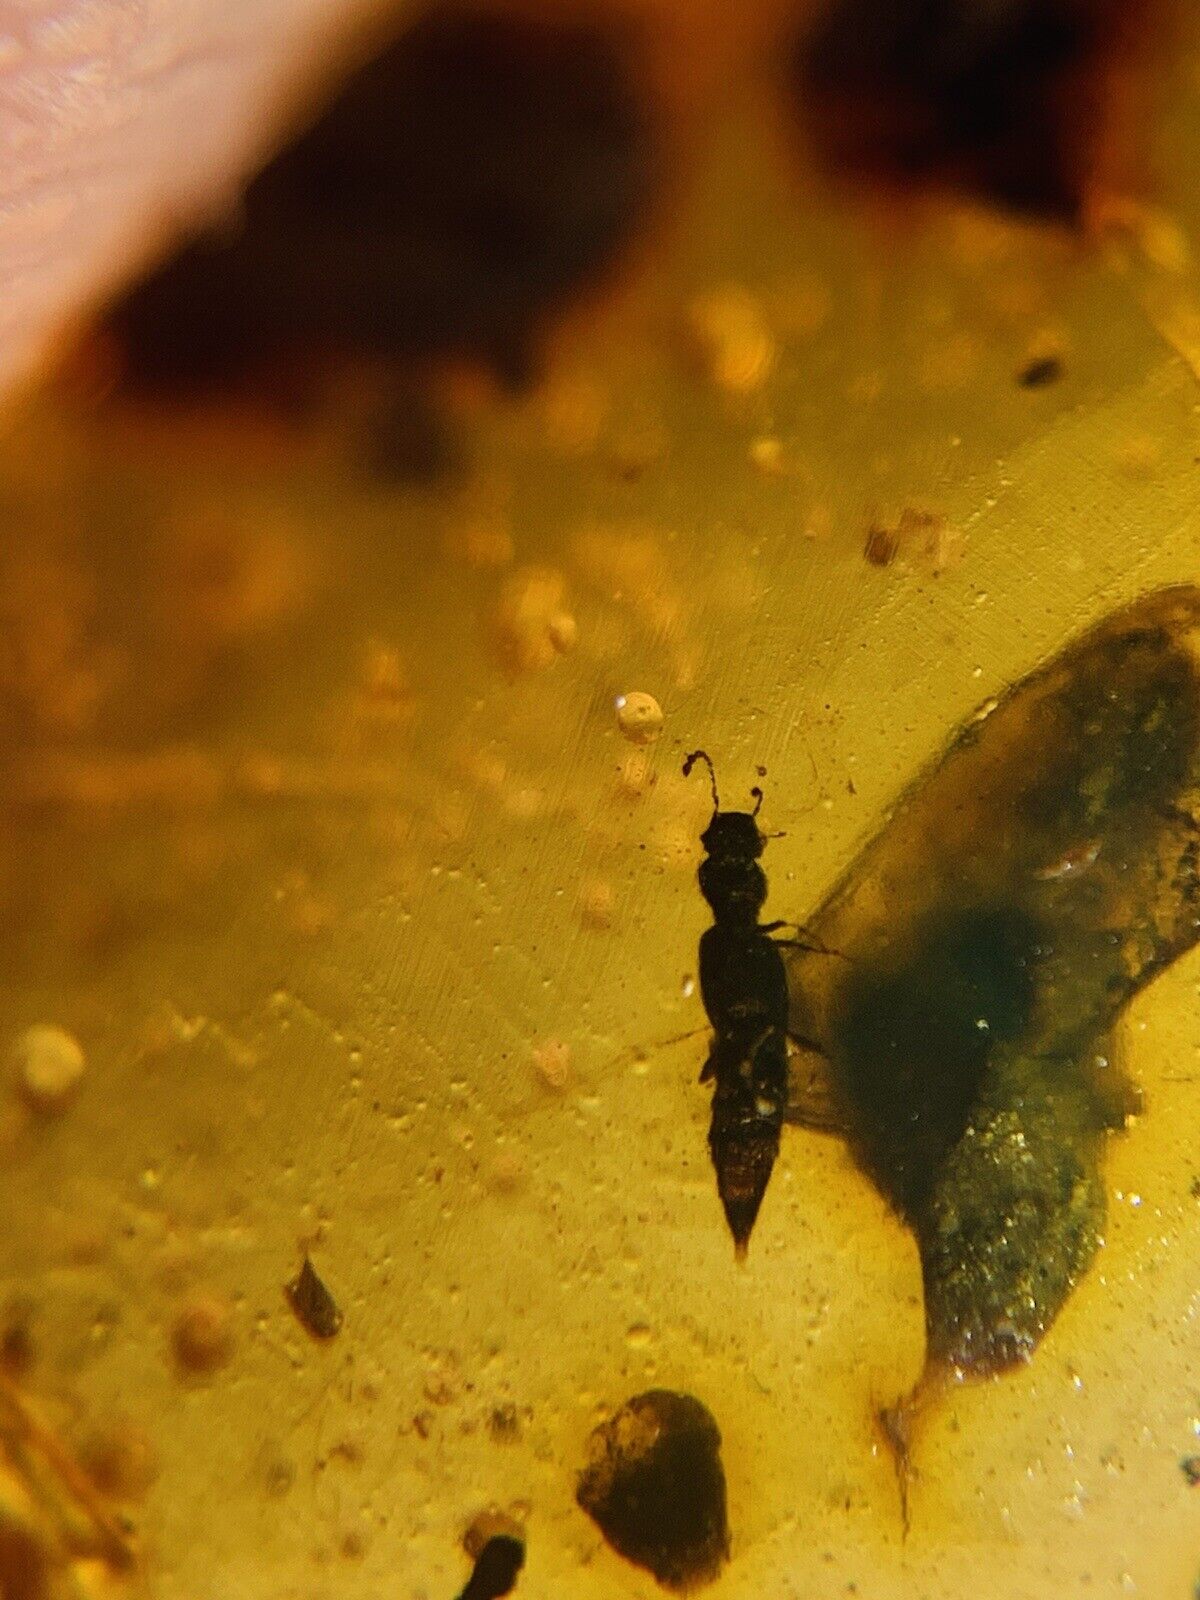 Coleoptera rove beetle Burmite Myanmar Burma Amber insect fossil dinosaur age